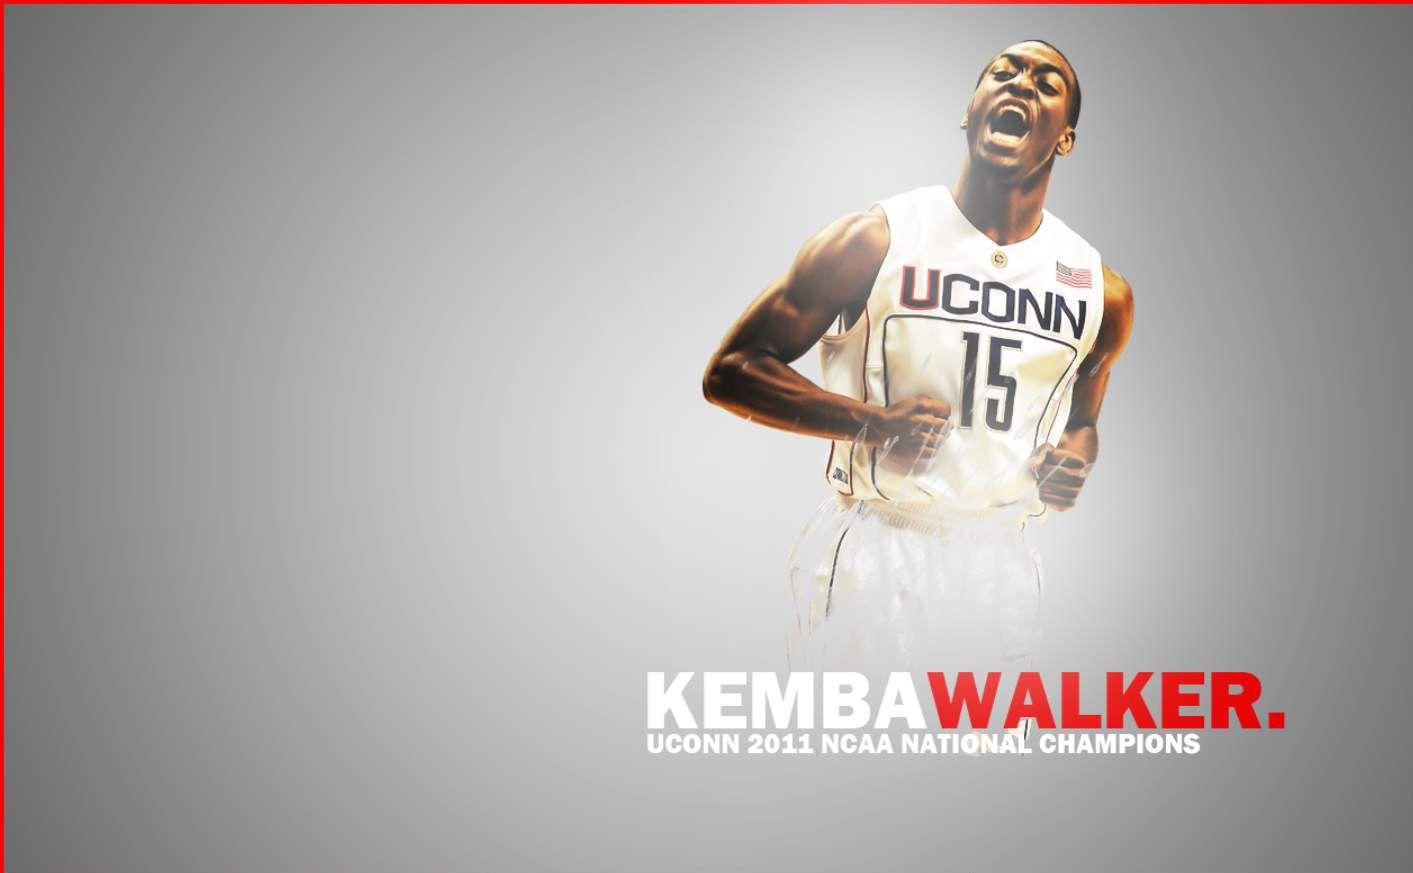 Image of Kemba Walker Wallpapers Hd